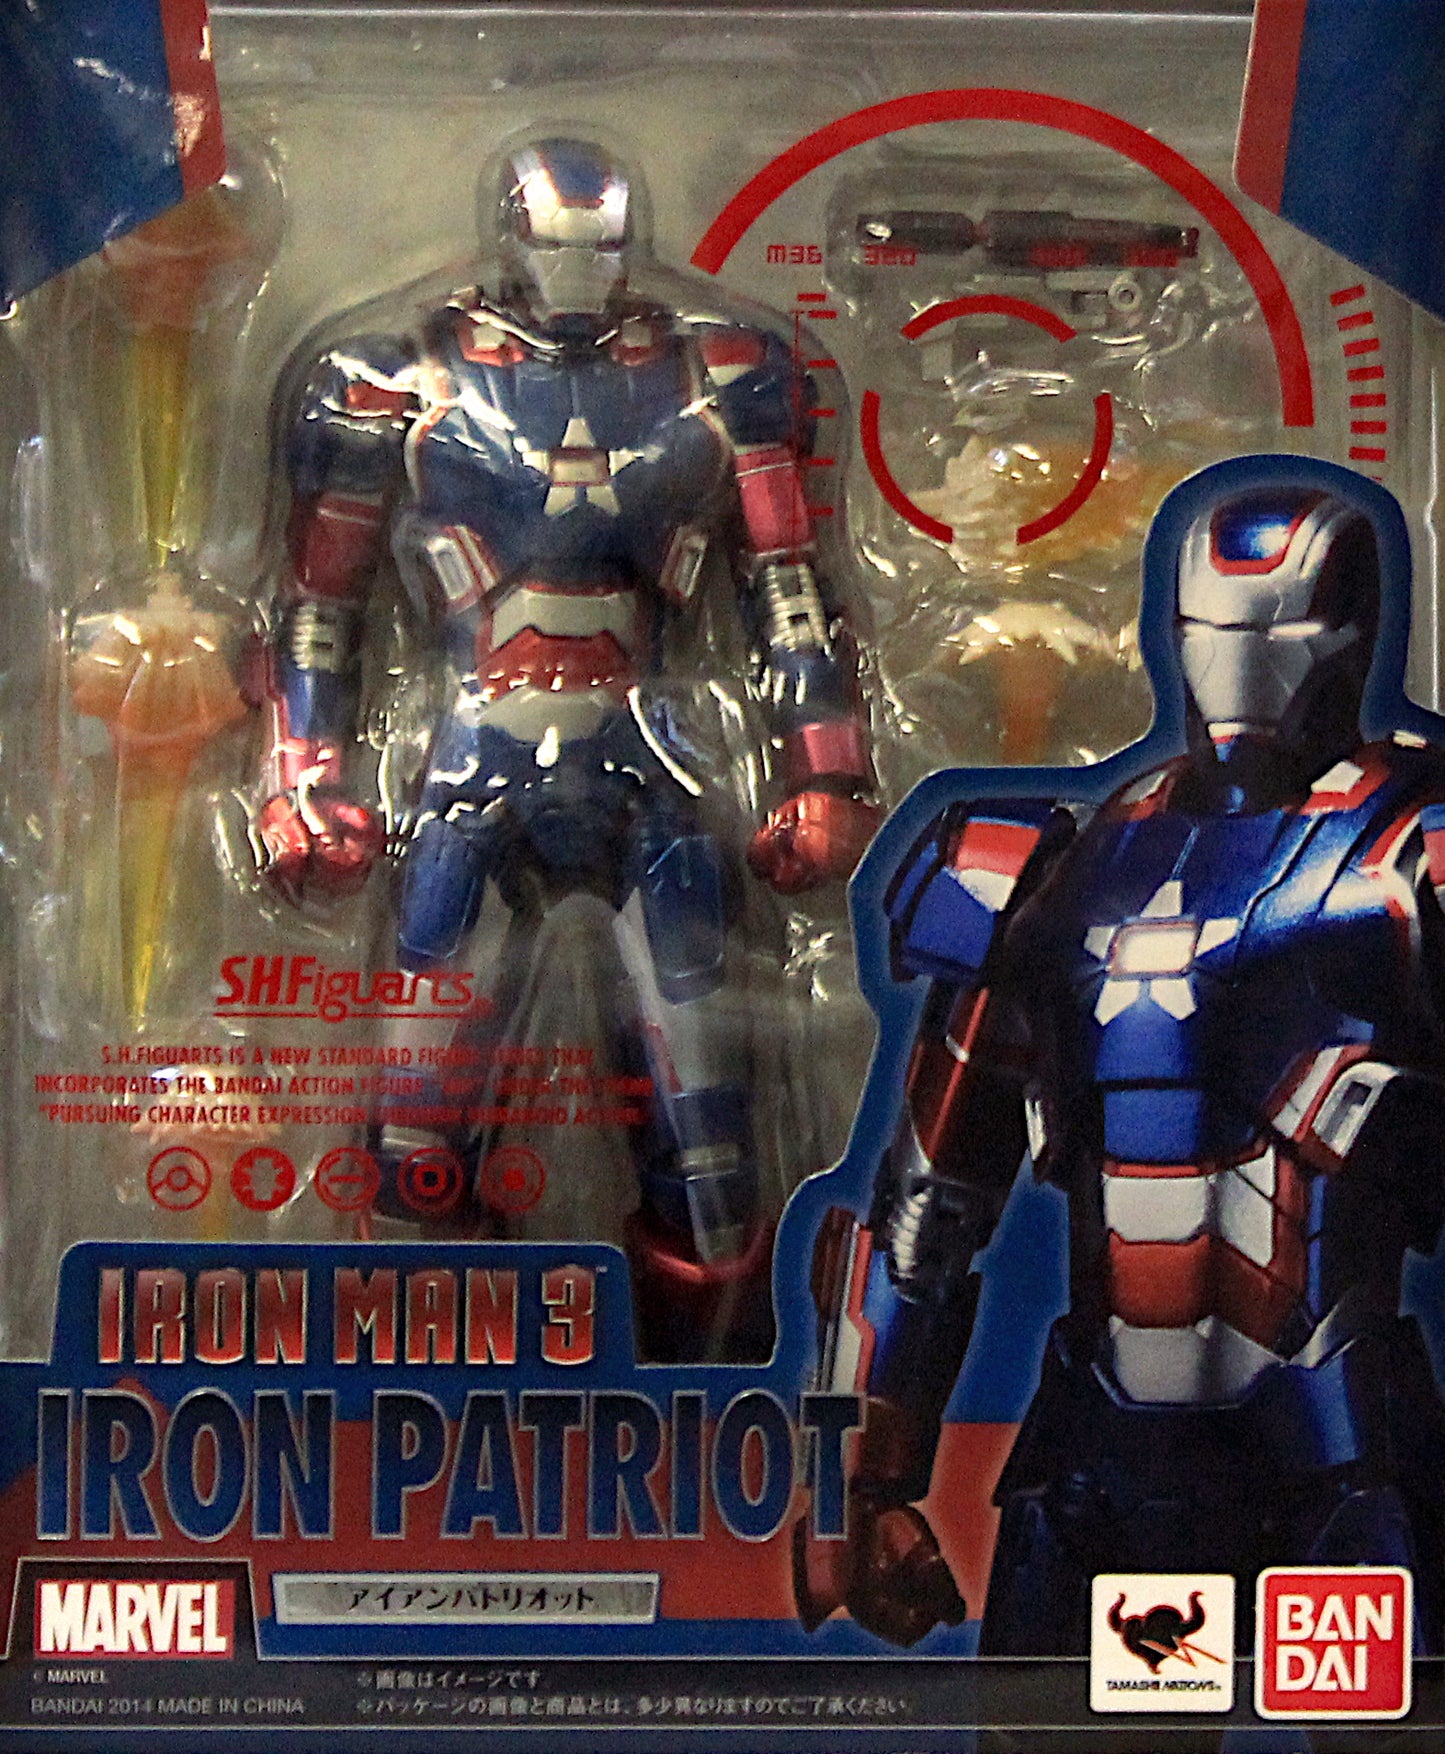 S.H. Figuarts Iron Man 3 - Iron Patriot